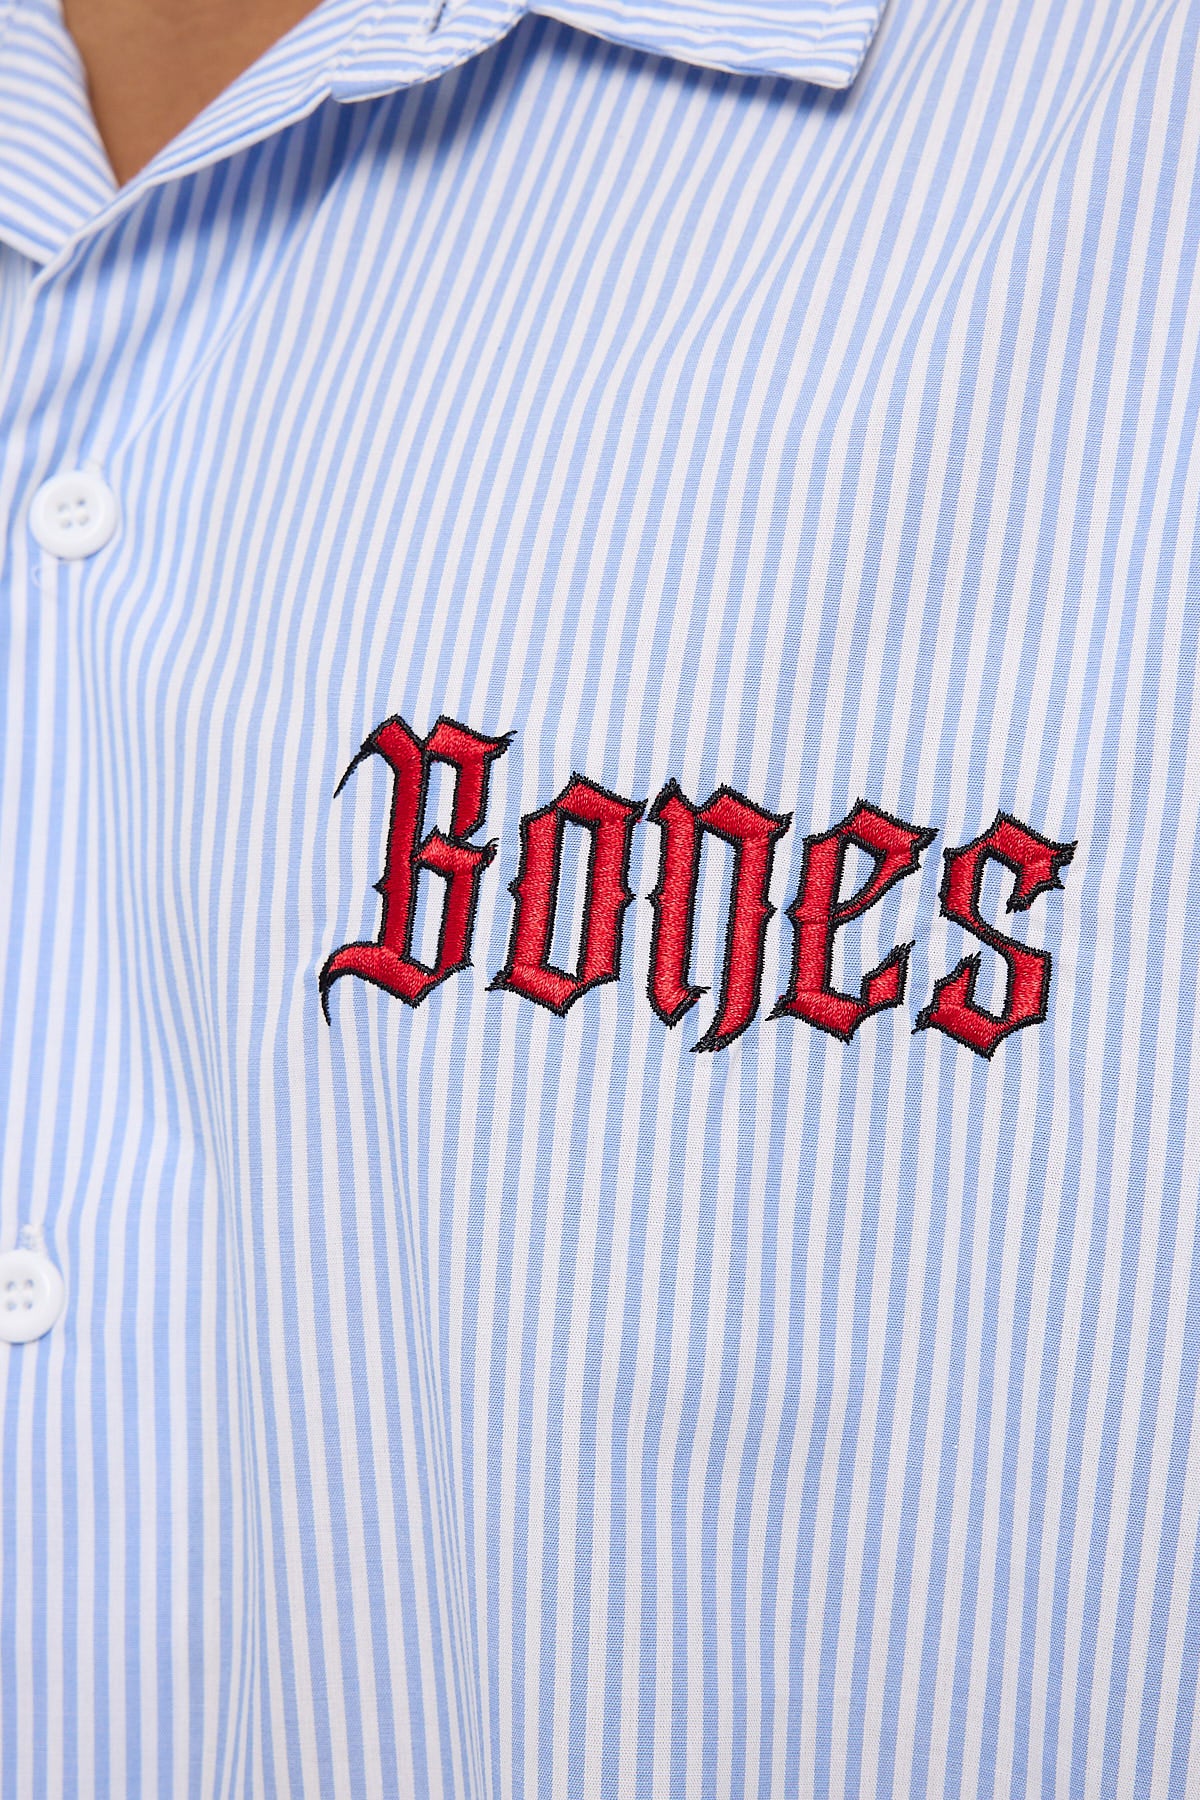 Billy Bones Club Bones Gothic Striped Shirt Blue/White